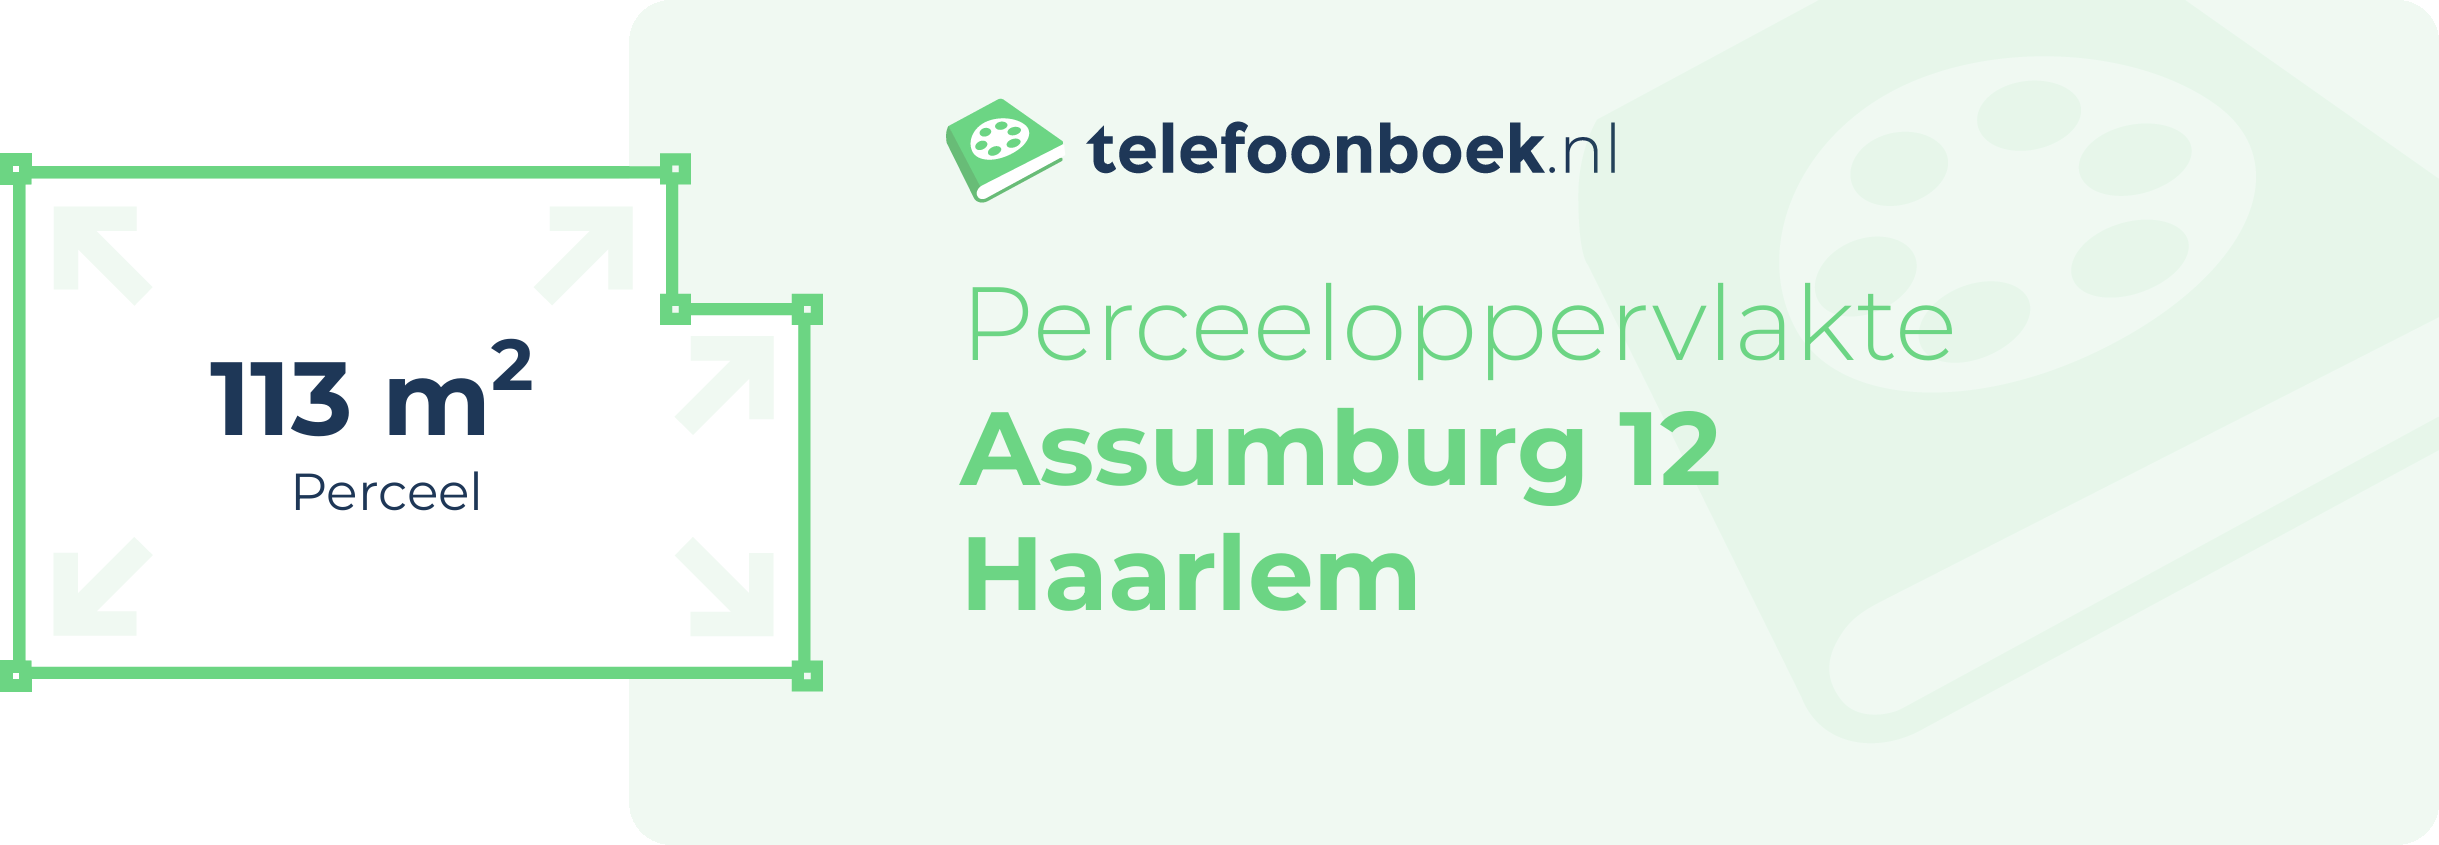 Perceeloppervlakte Assumburg 12 Haarlem